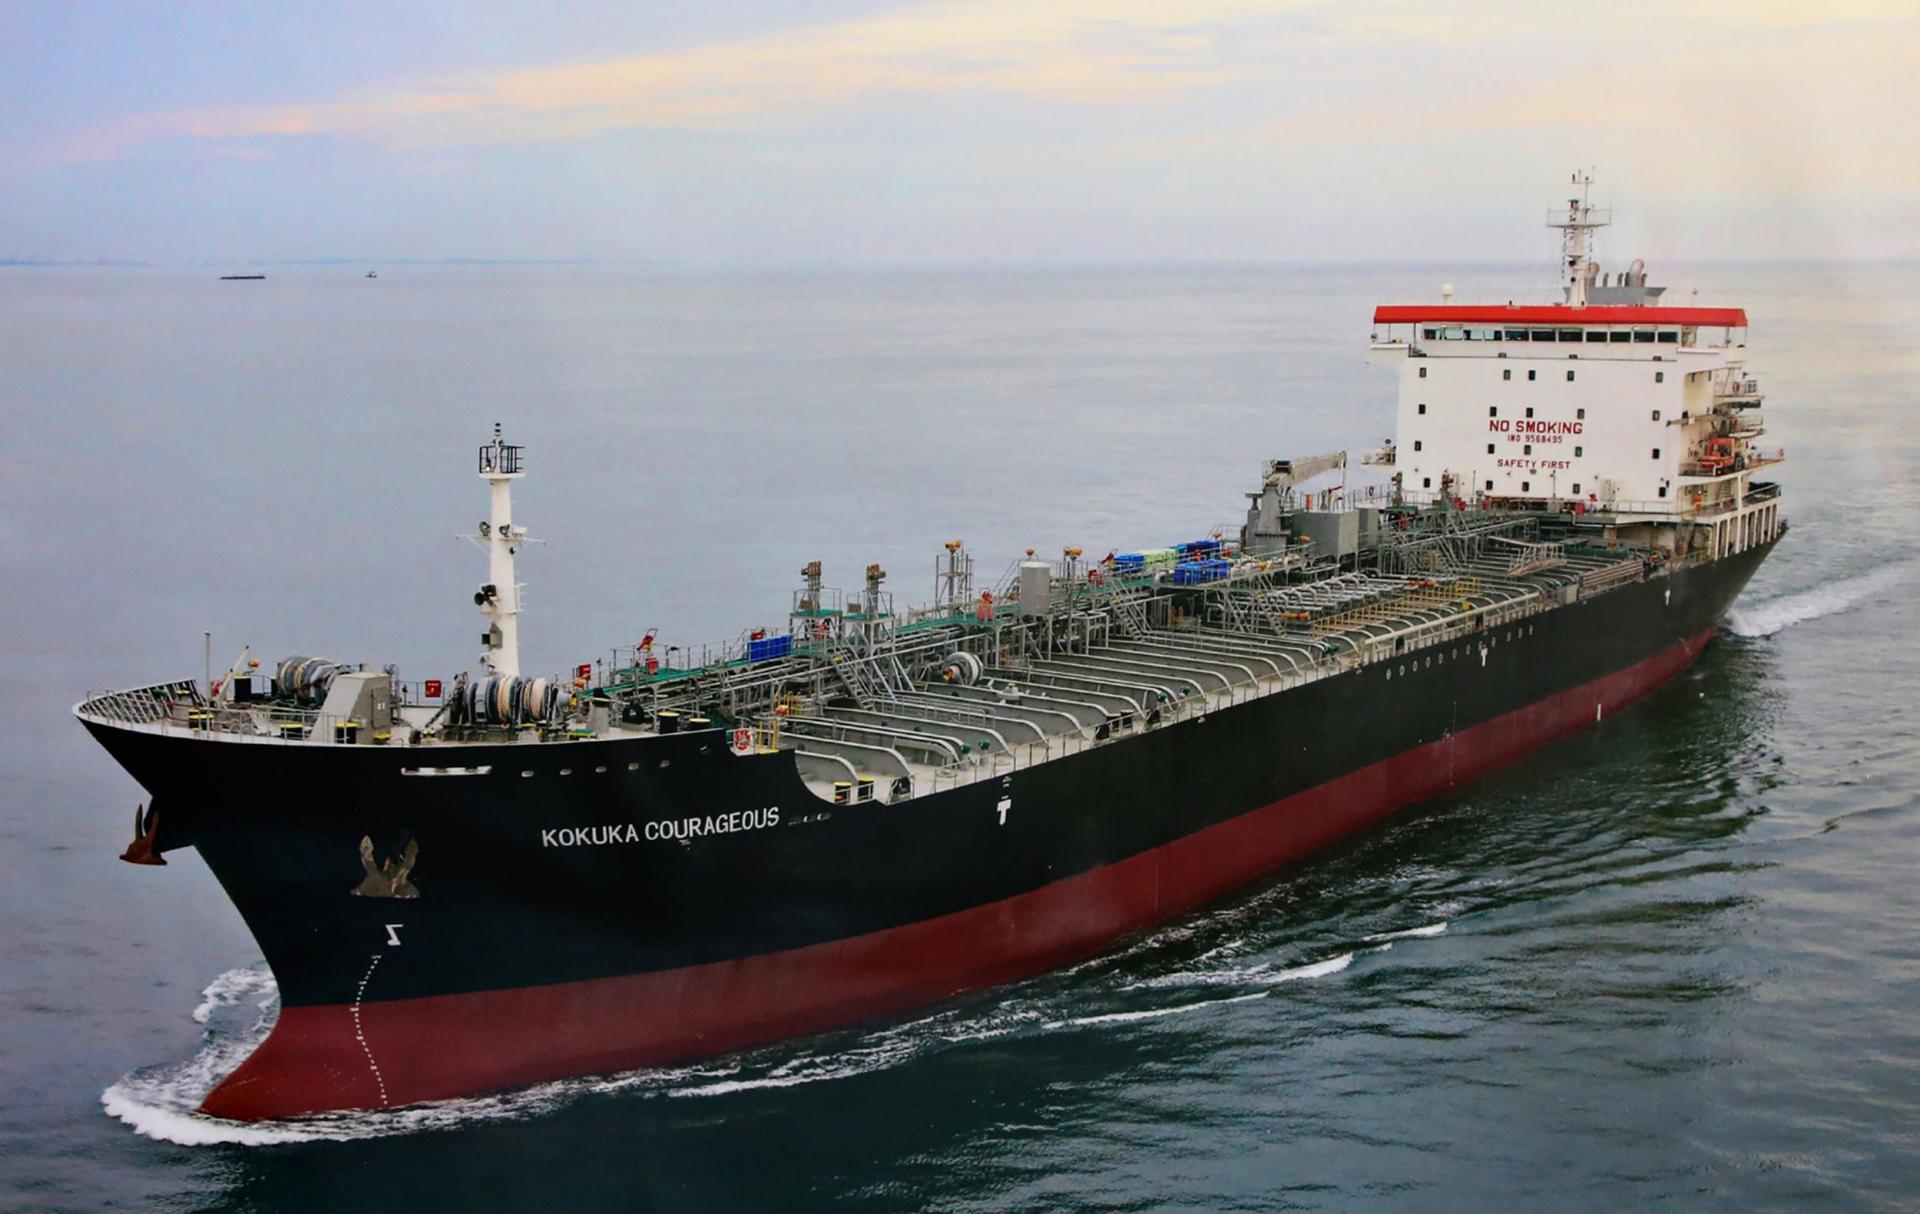 The methanol tanker Kokuka Courageous